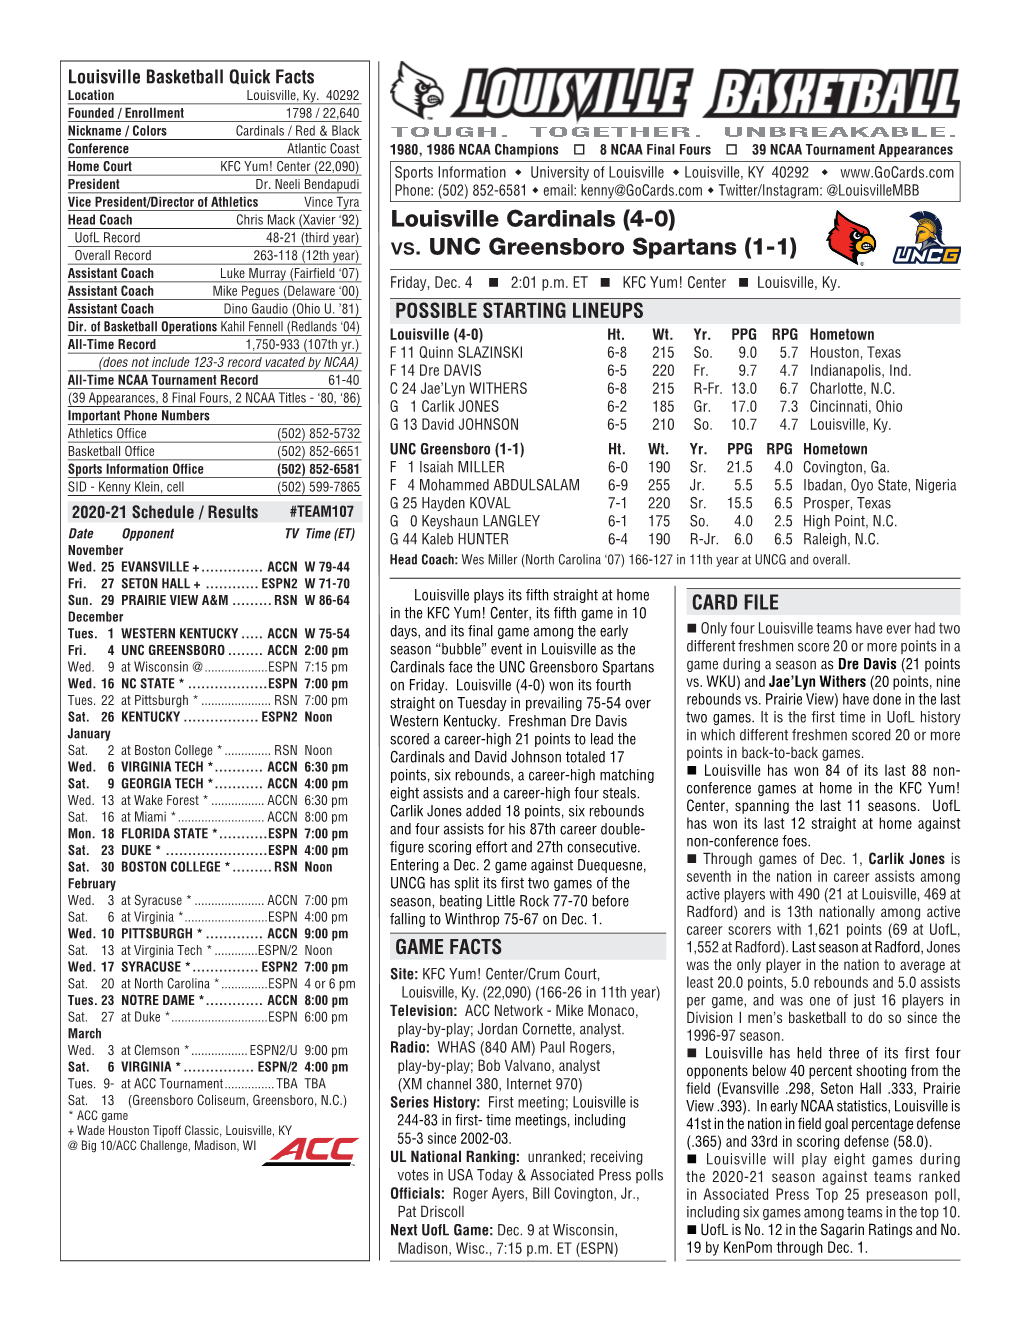 Louisville Cardinals (4-0) Vs. UNC Greensboro Spartans (1-1)